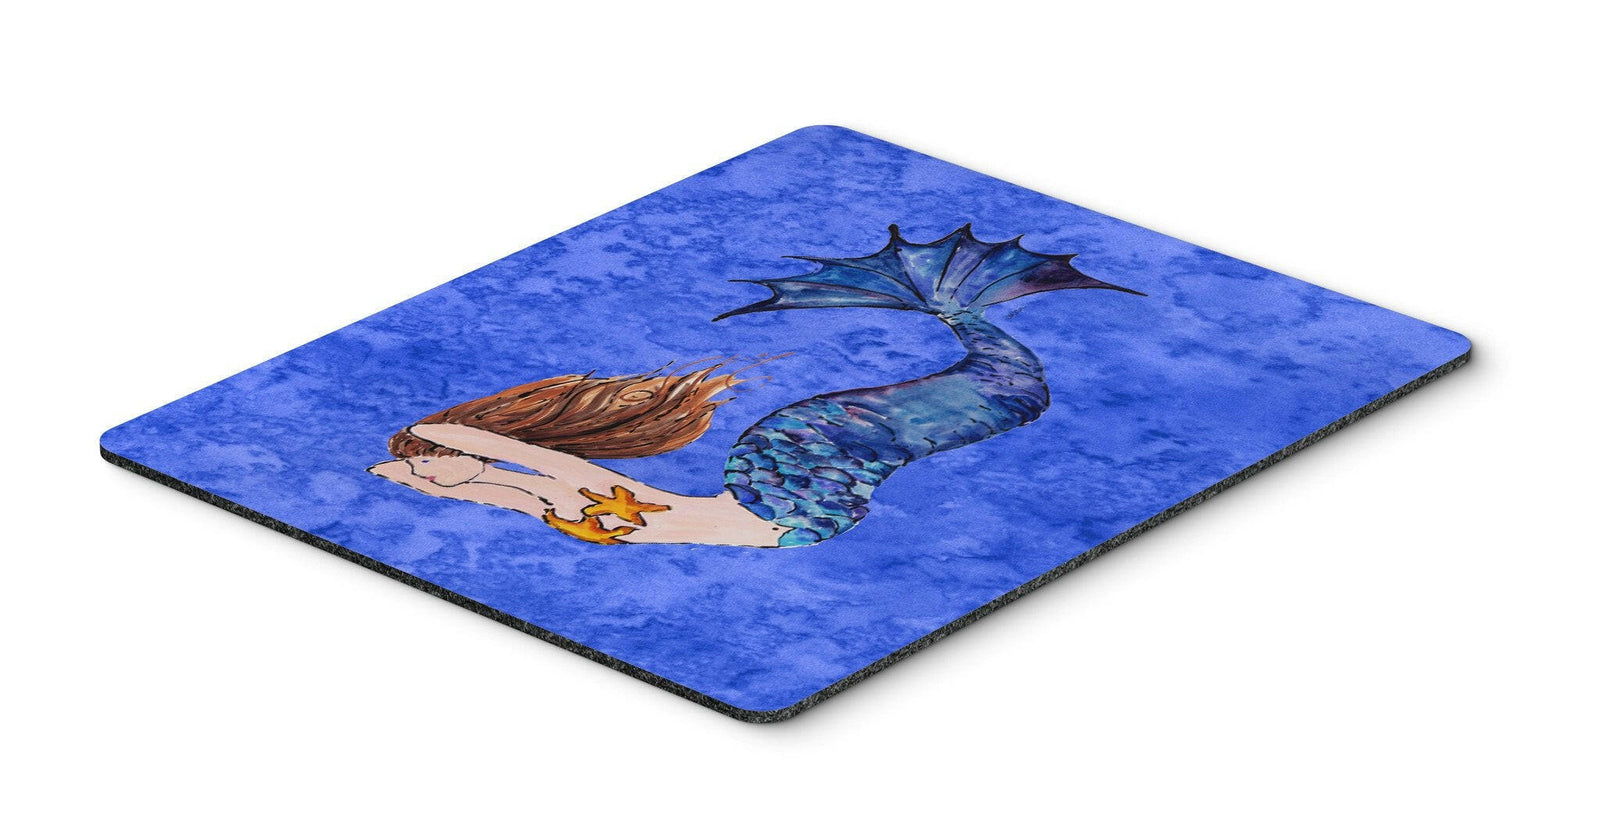 Brunette Mermaid on Blue Mouse Pad, Hot Pad or Trivet 8725MP by Caroline's Treasures